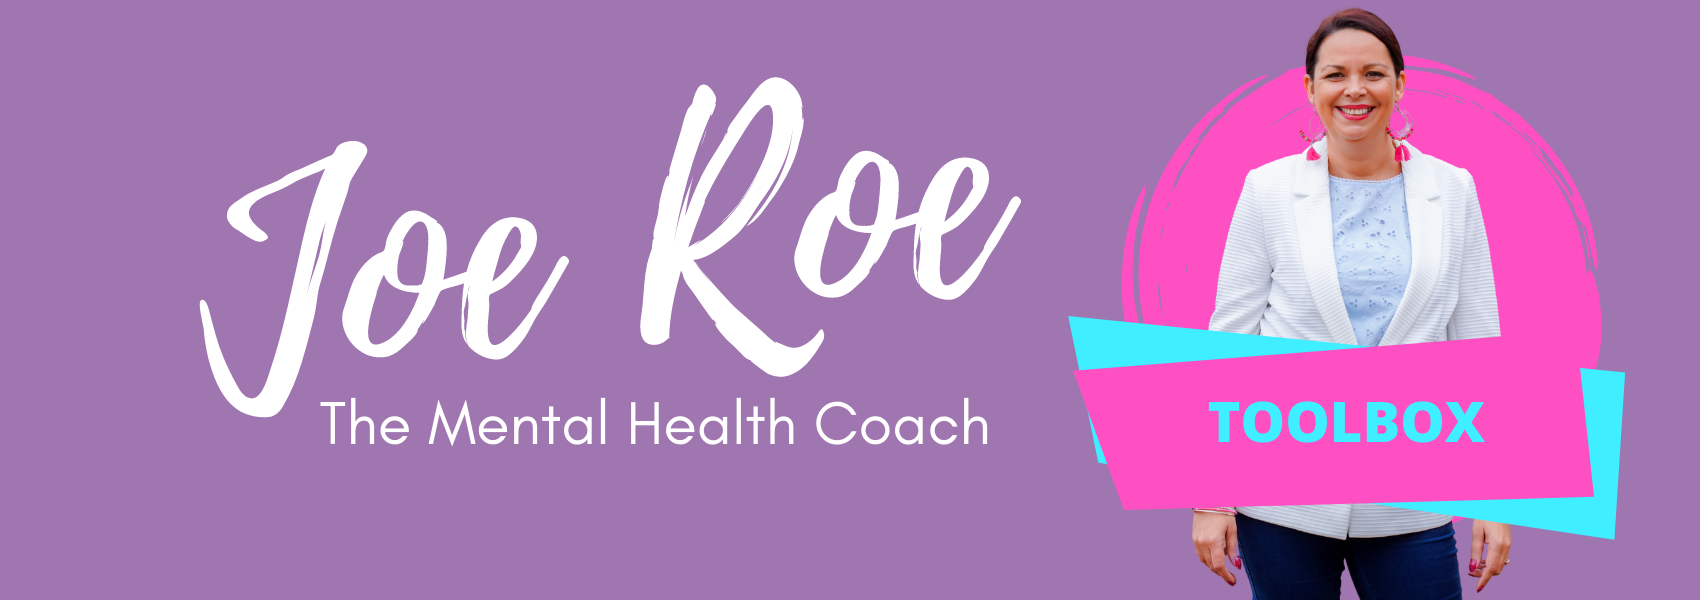 Header Image. Joe Roe, the Mental Health Coach. Joe smiles against a purple background.